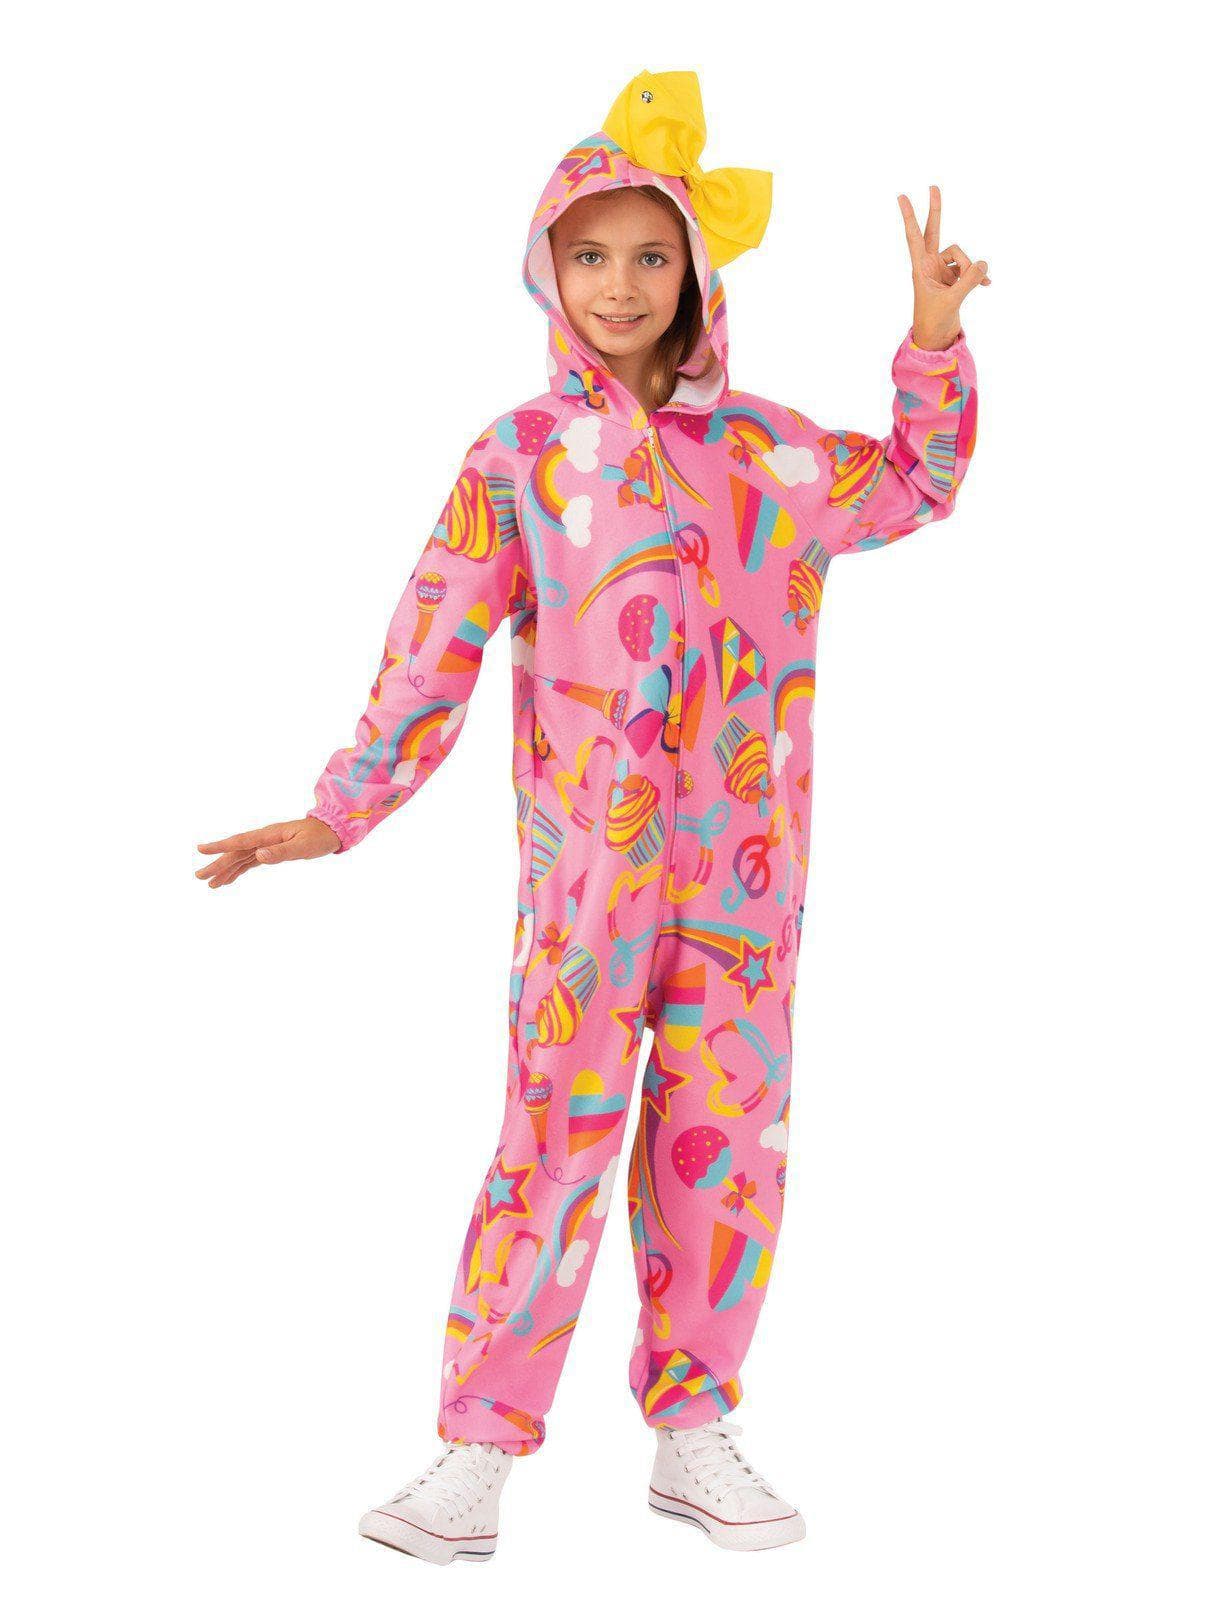 Kids Rock Stars Jojo Siwa Costume - costumes.com